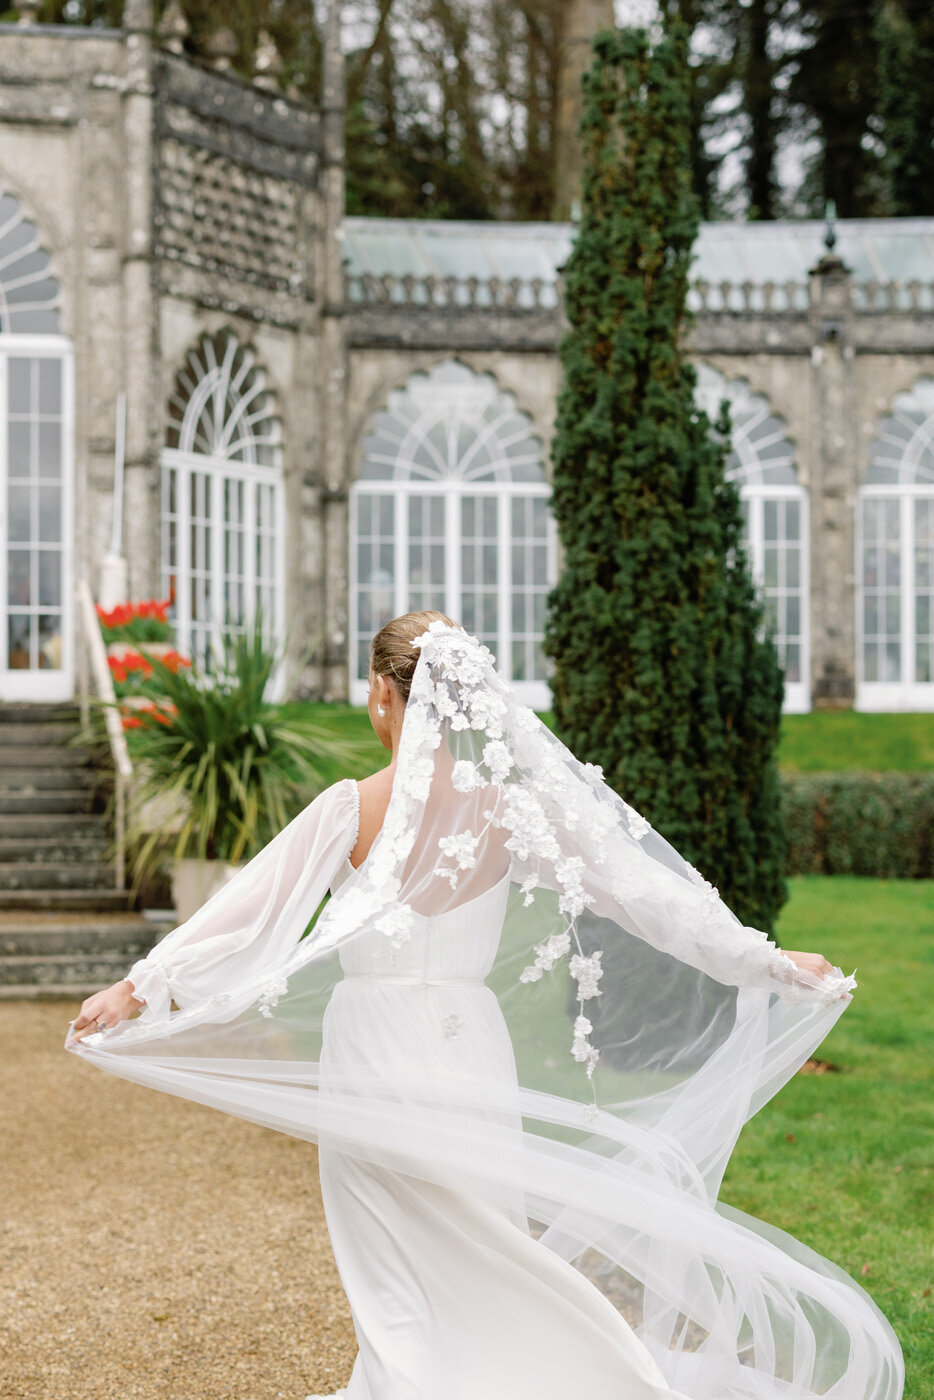 London Wedding Photographer | Kelsie Elizabeth - 099